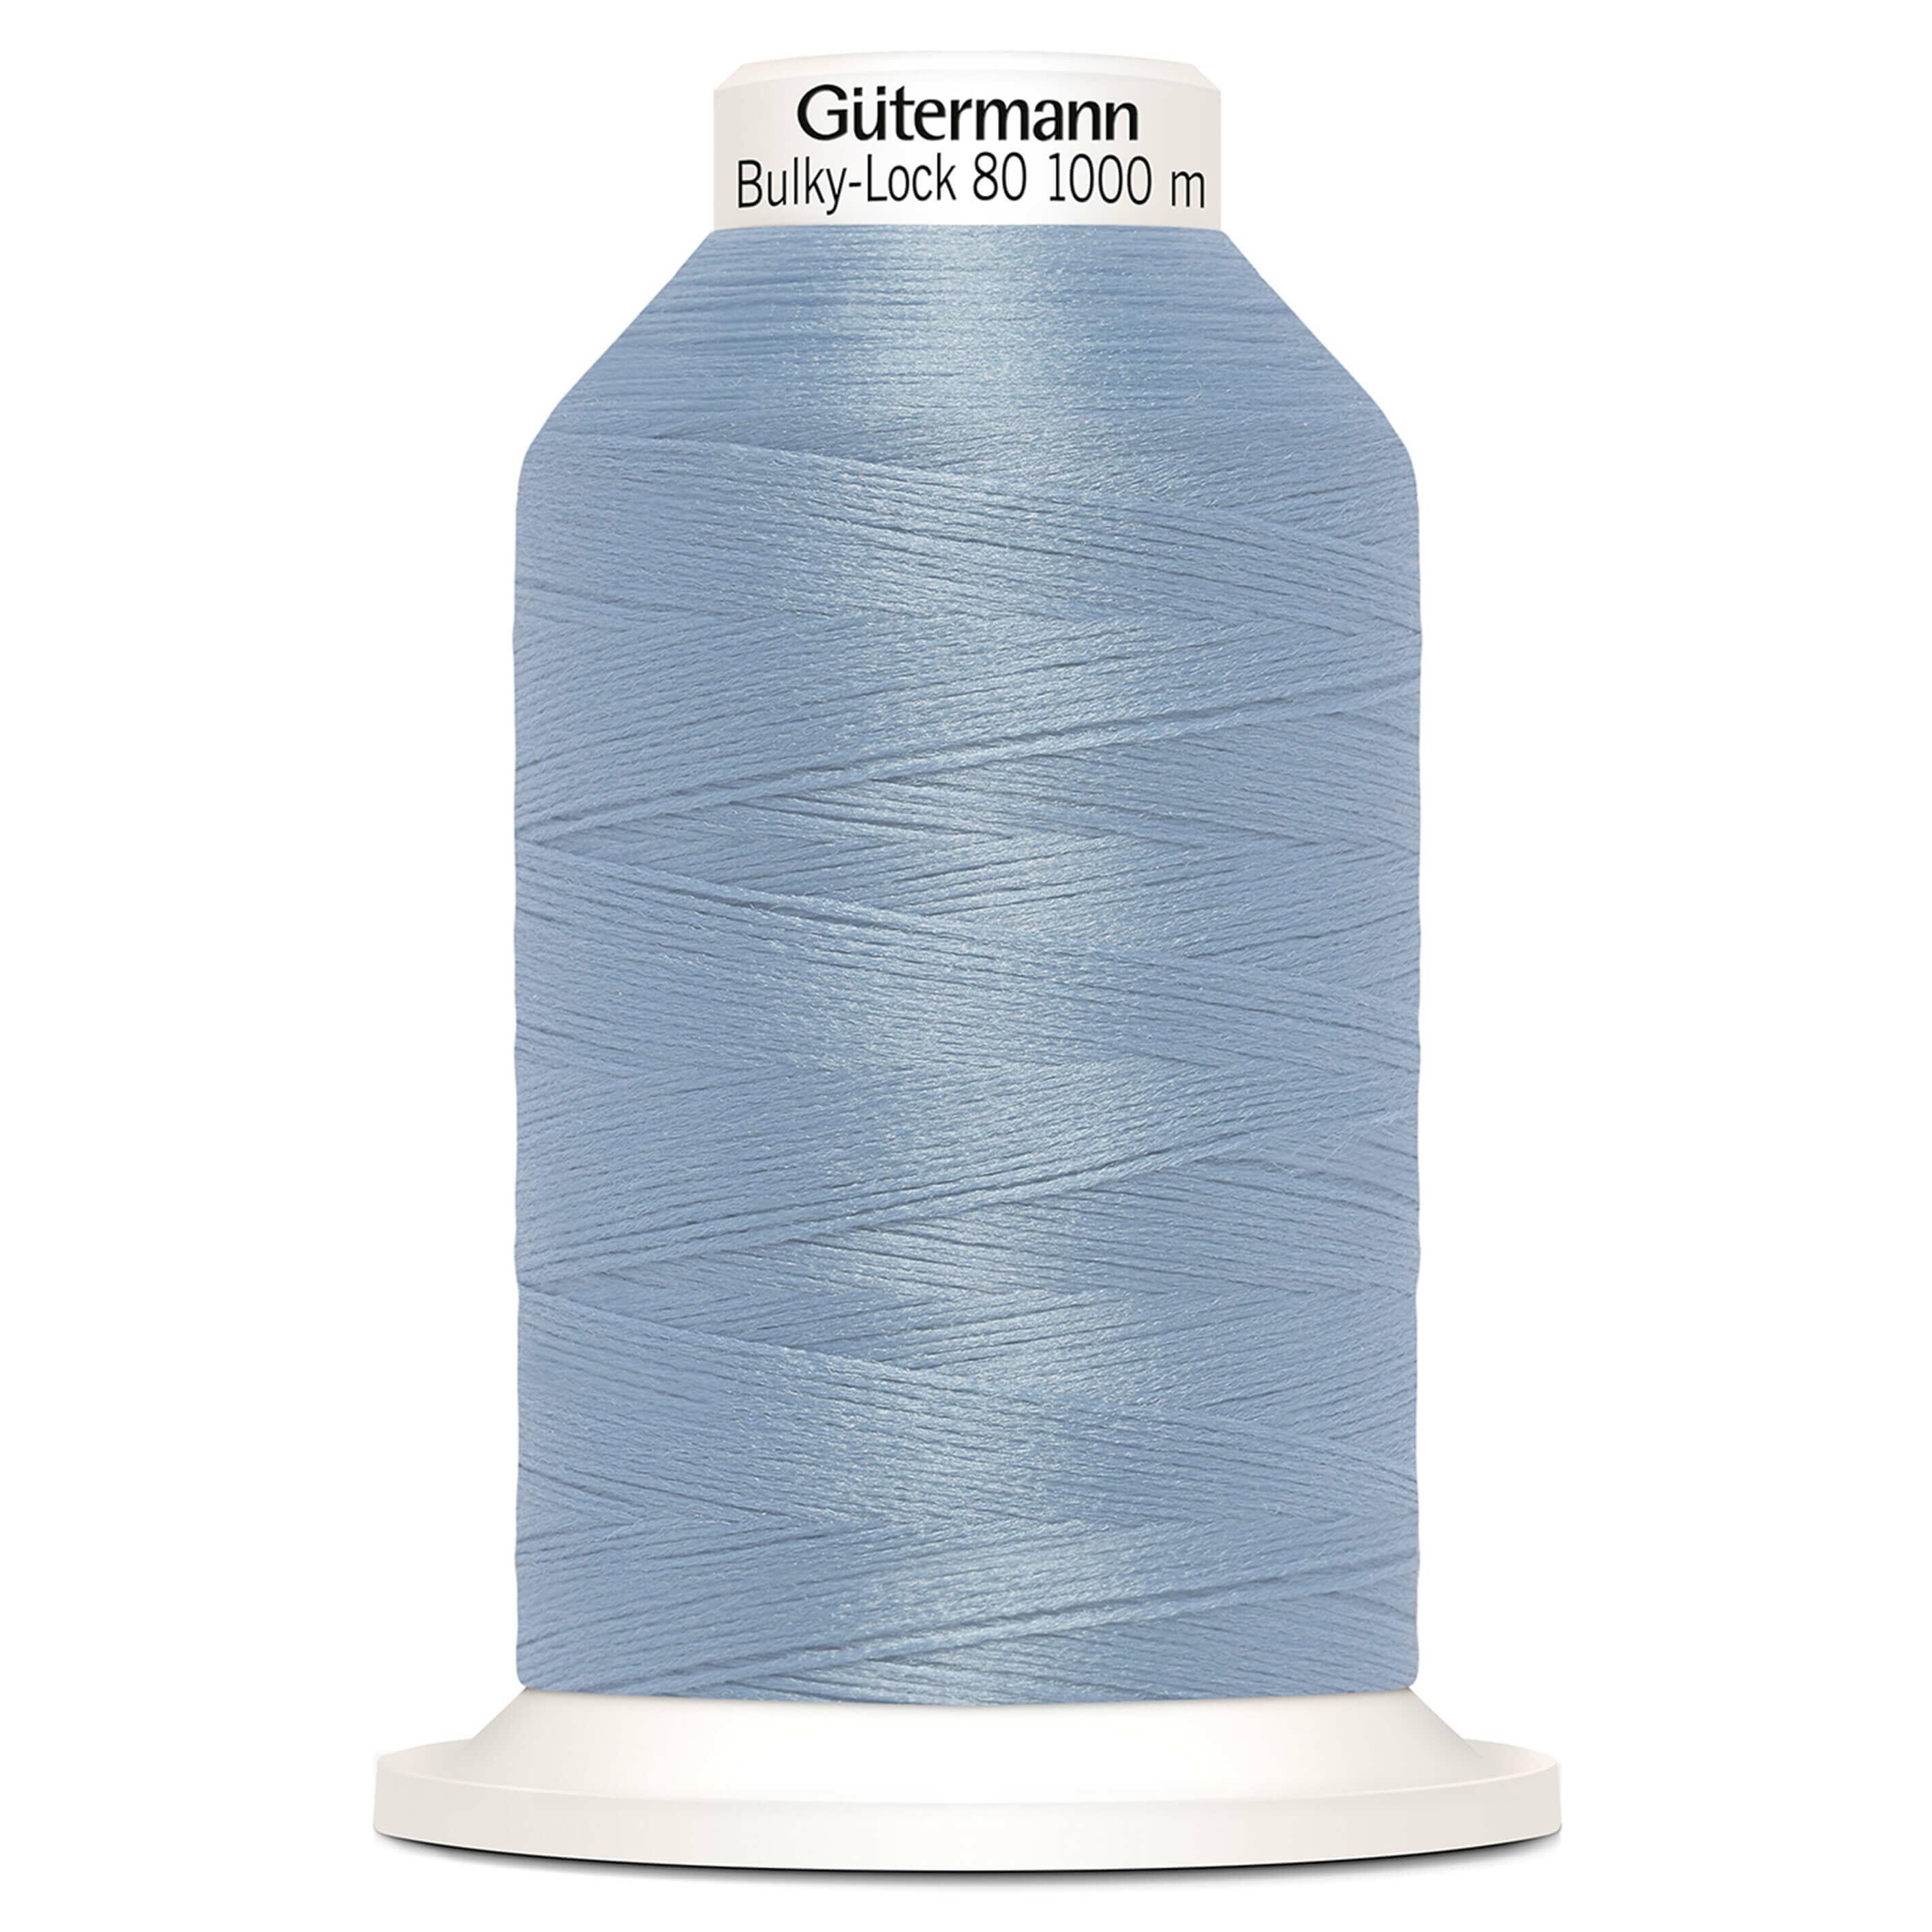 Gutermann Bulky Lock 80 overlocking thread in colour 143 Baby Blue